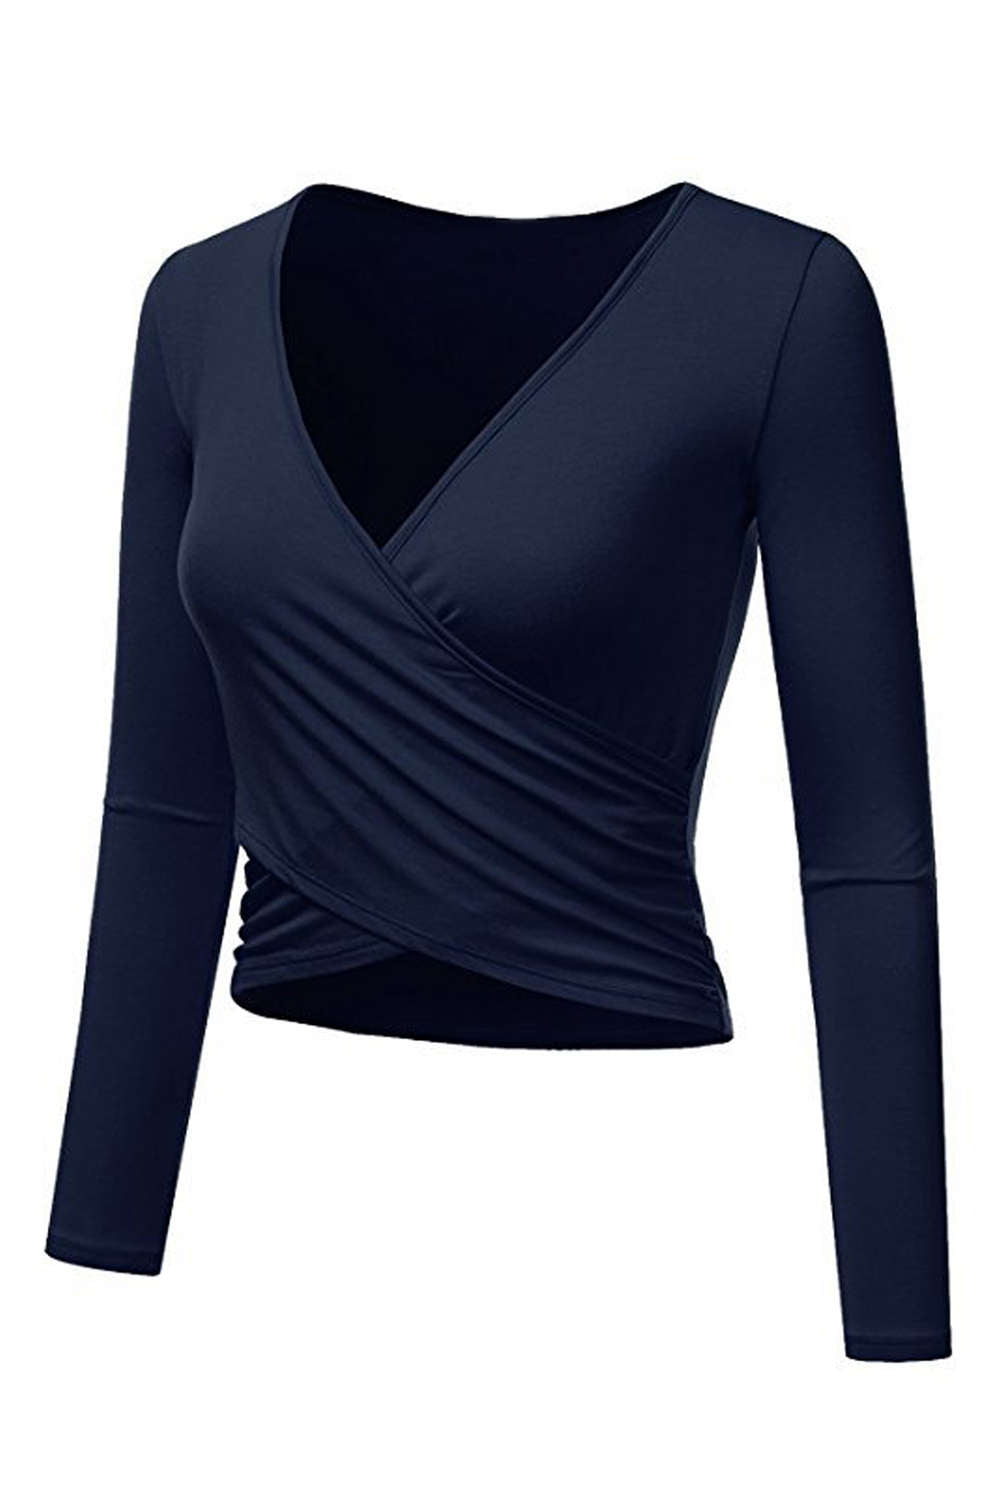 Iyasson Women's V-neck Long Sleeve Wrap Crop Tops